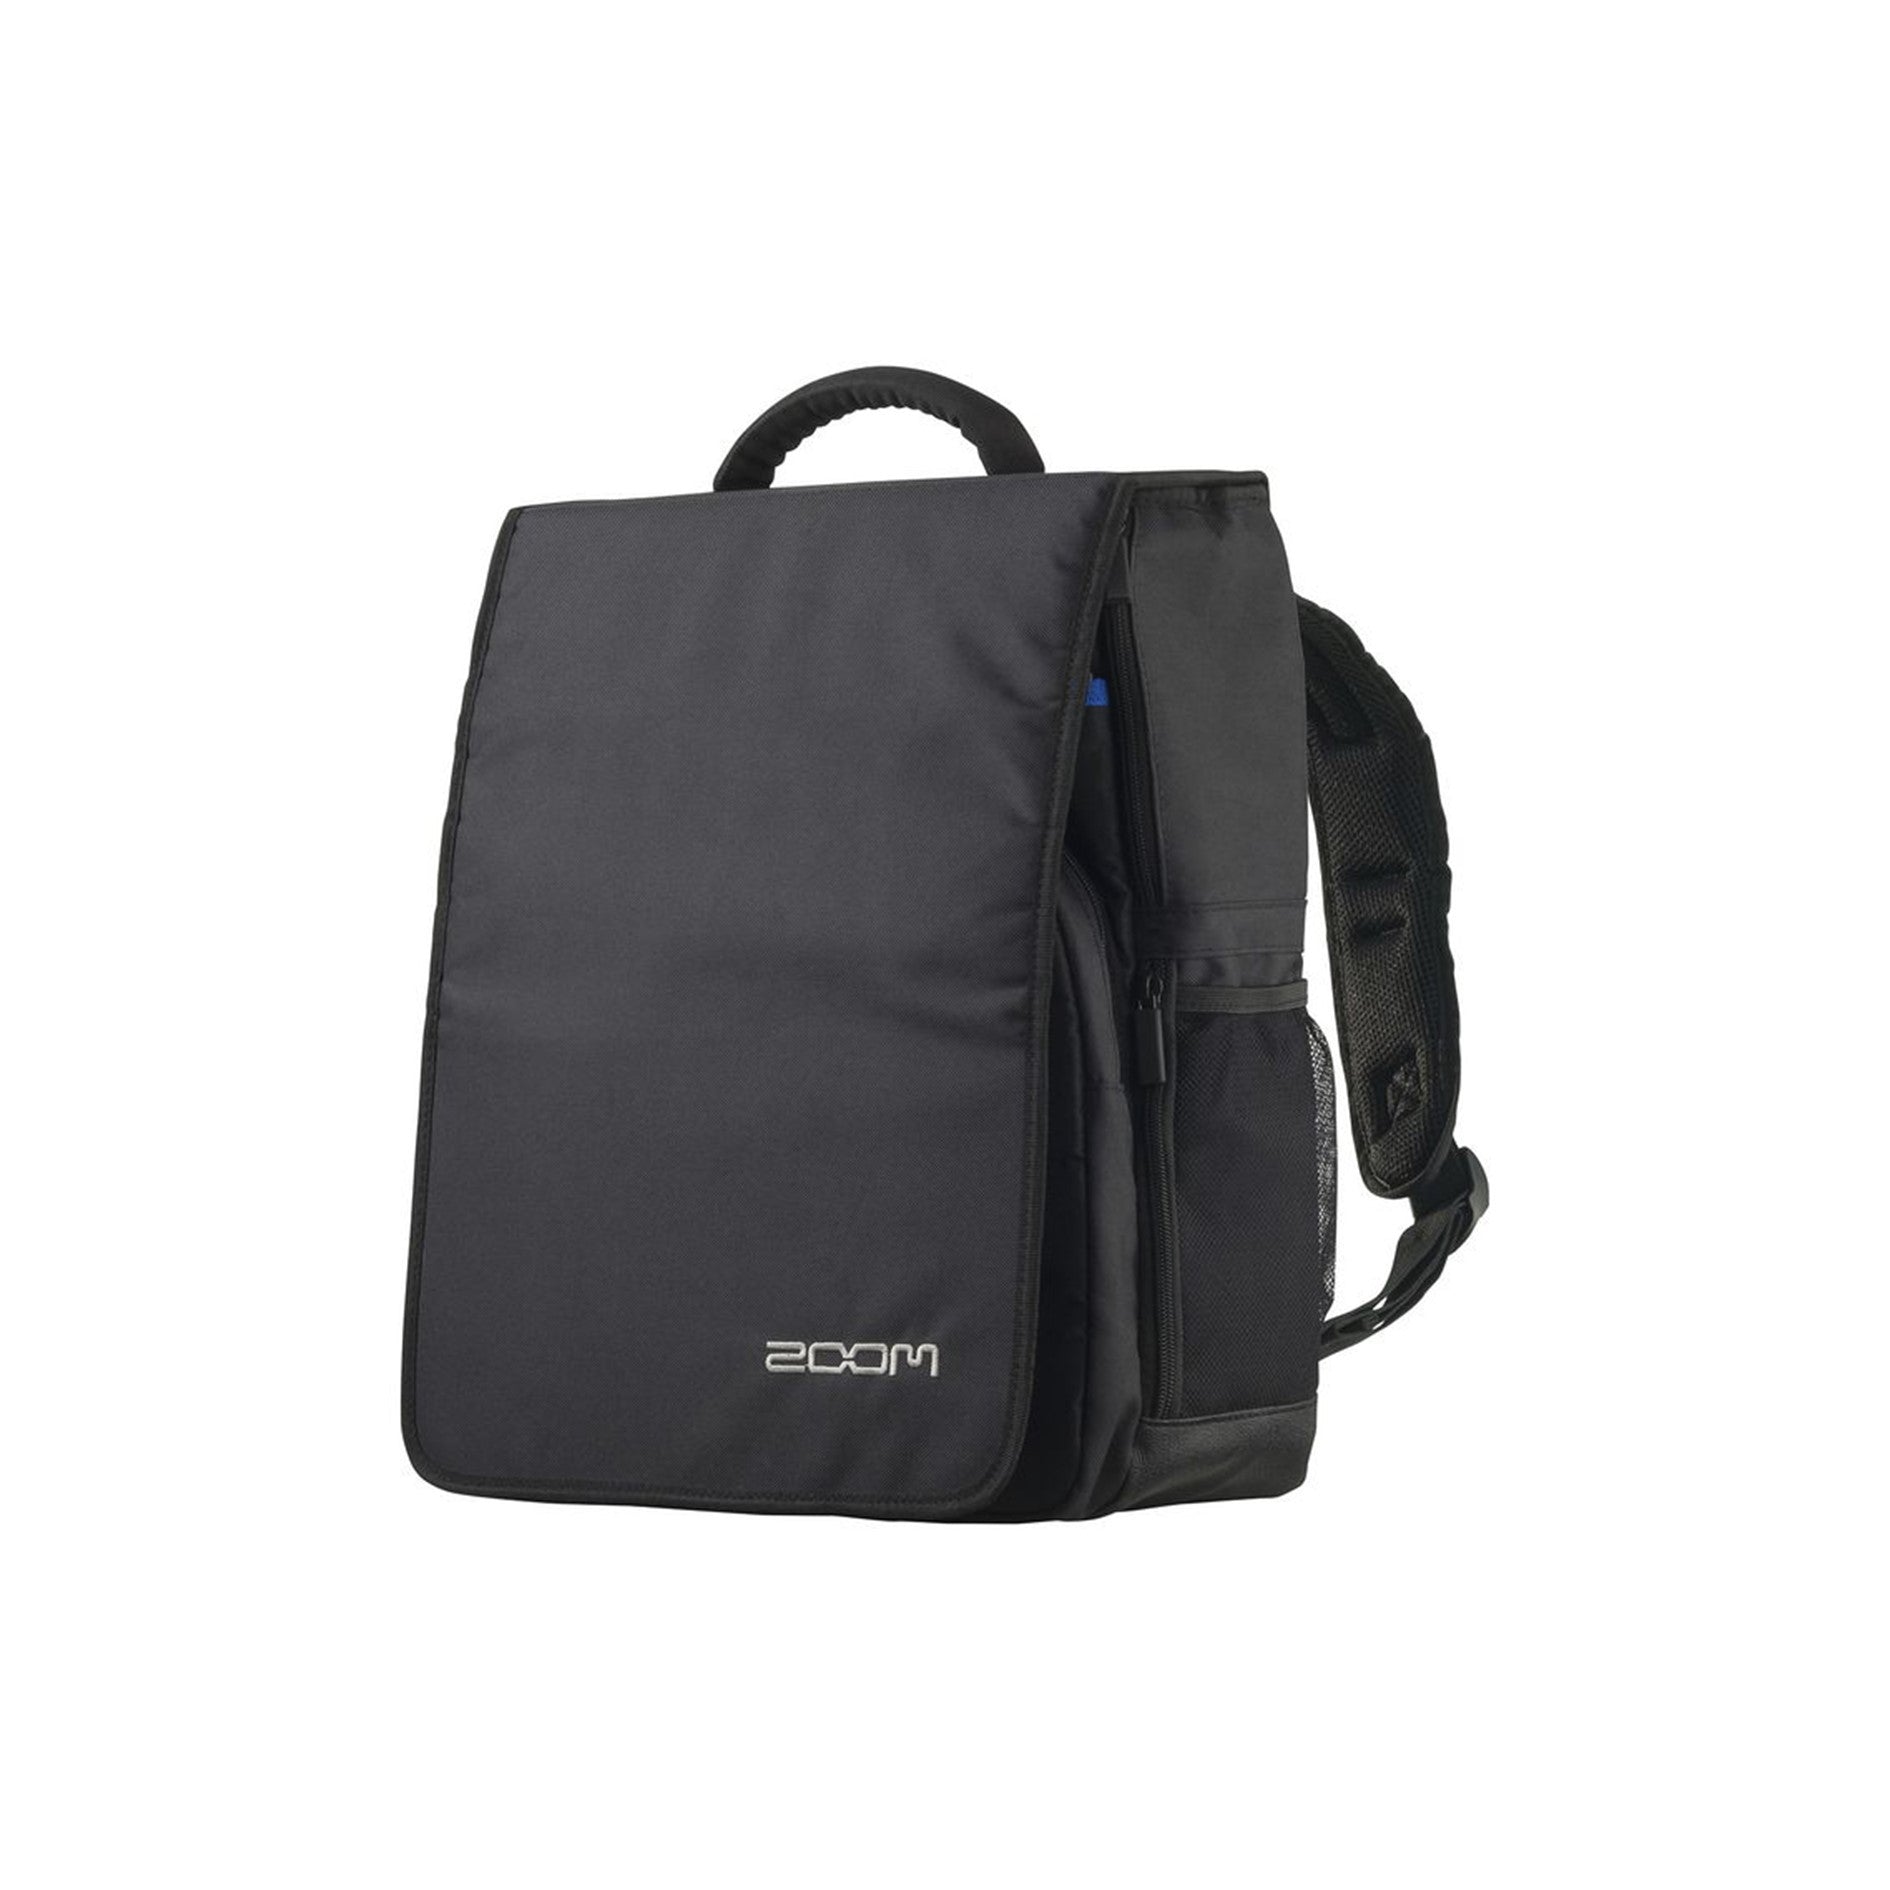 Zoom CBA-96 Multi-purpose Creator Bag